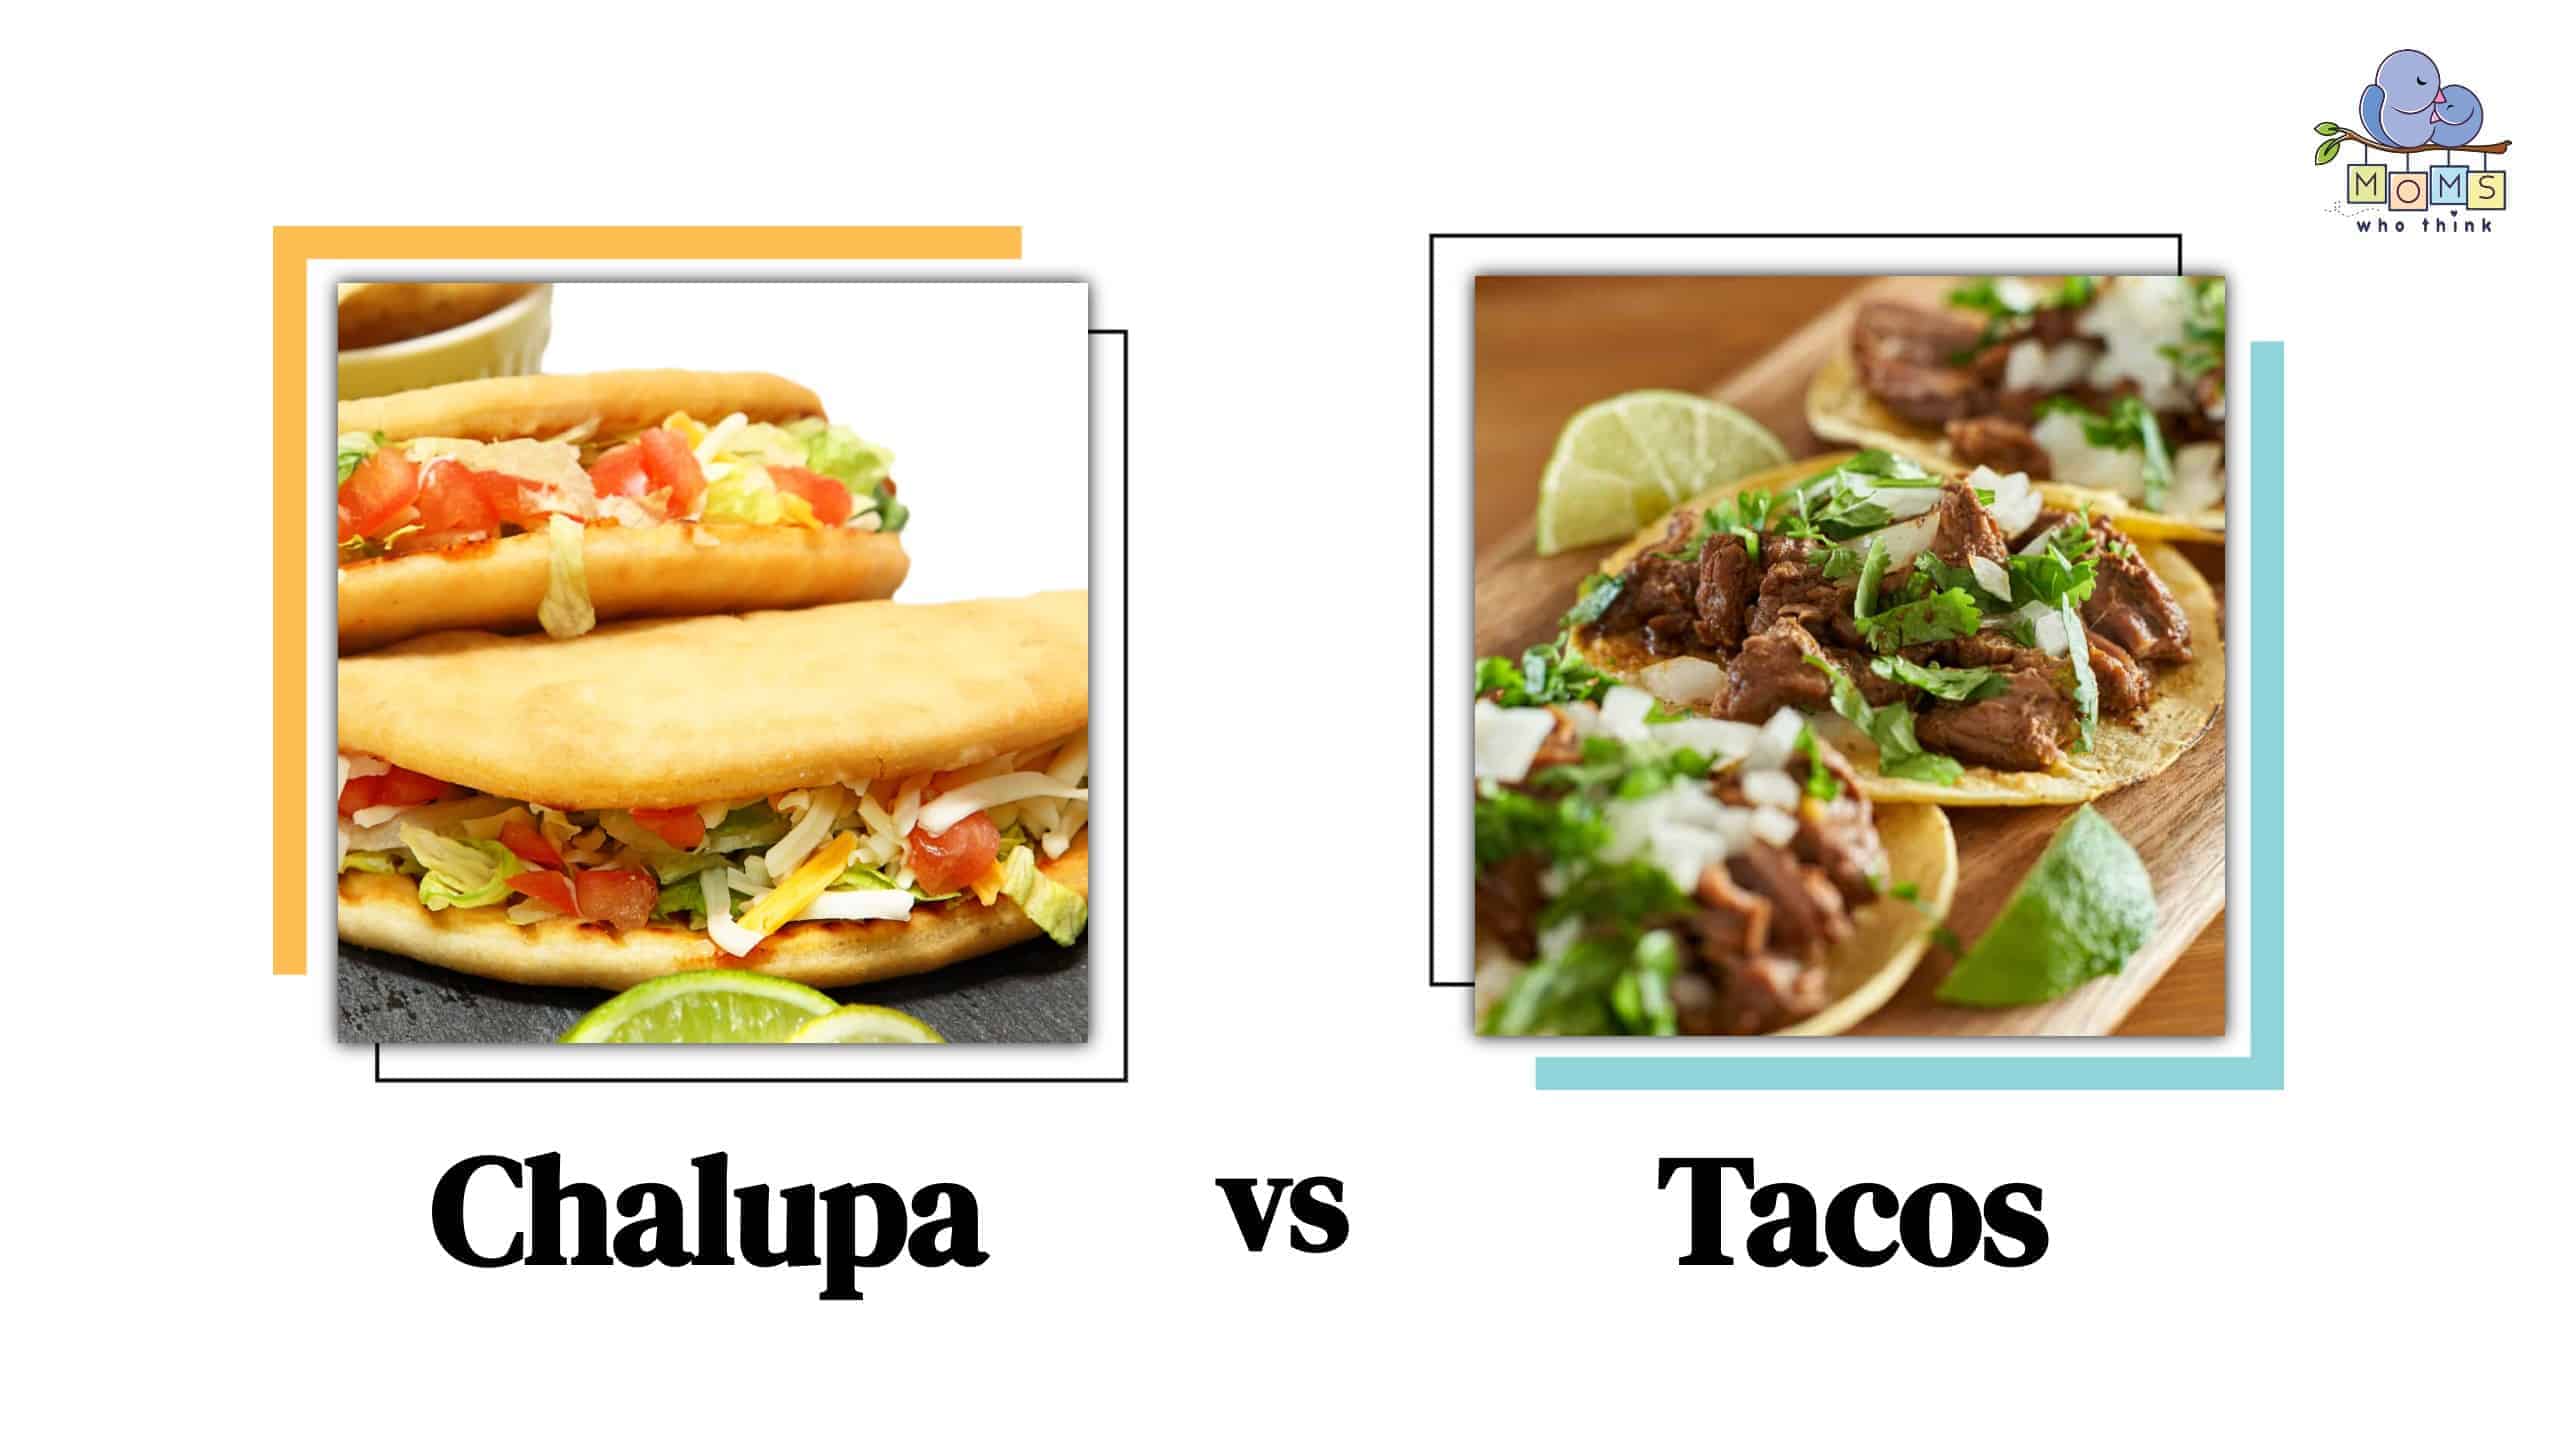 Chalupas vs. Tacos: Feature Image